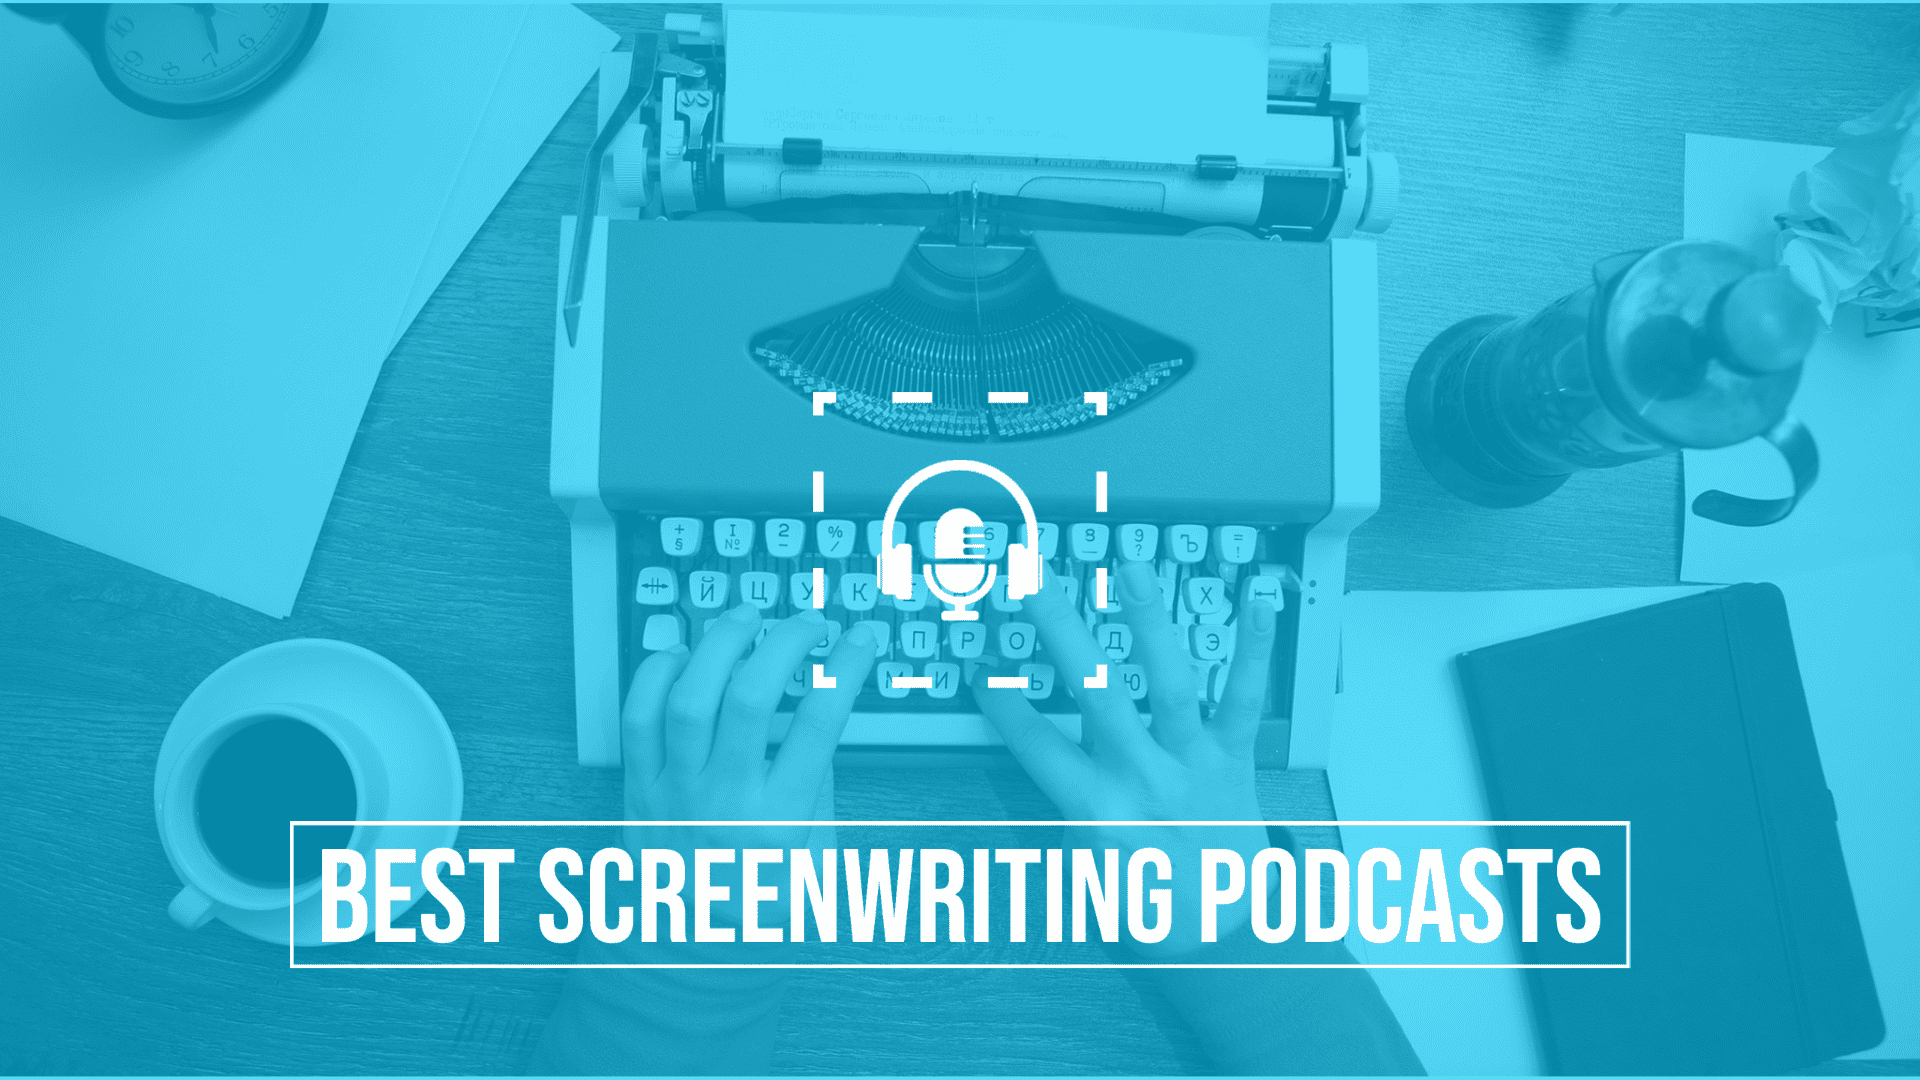 Podcast  Bulletproof Screenwriting